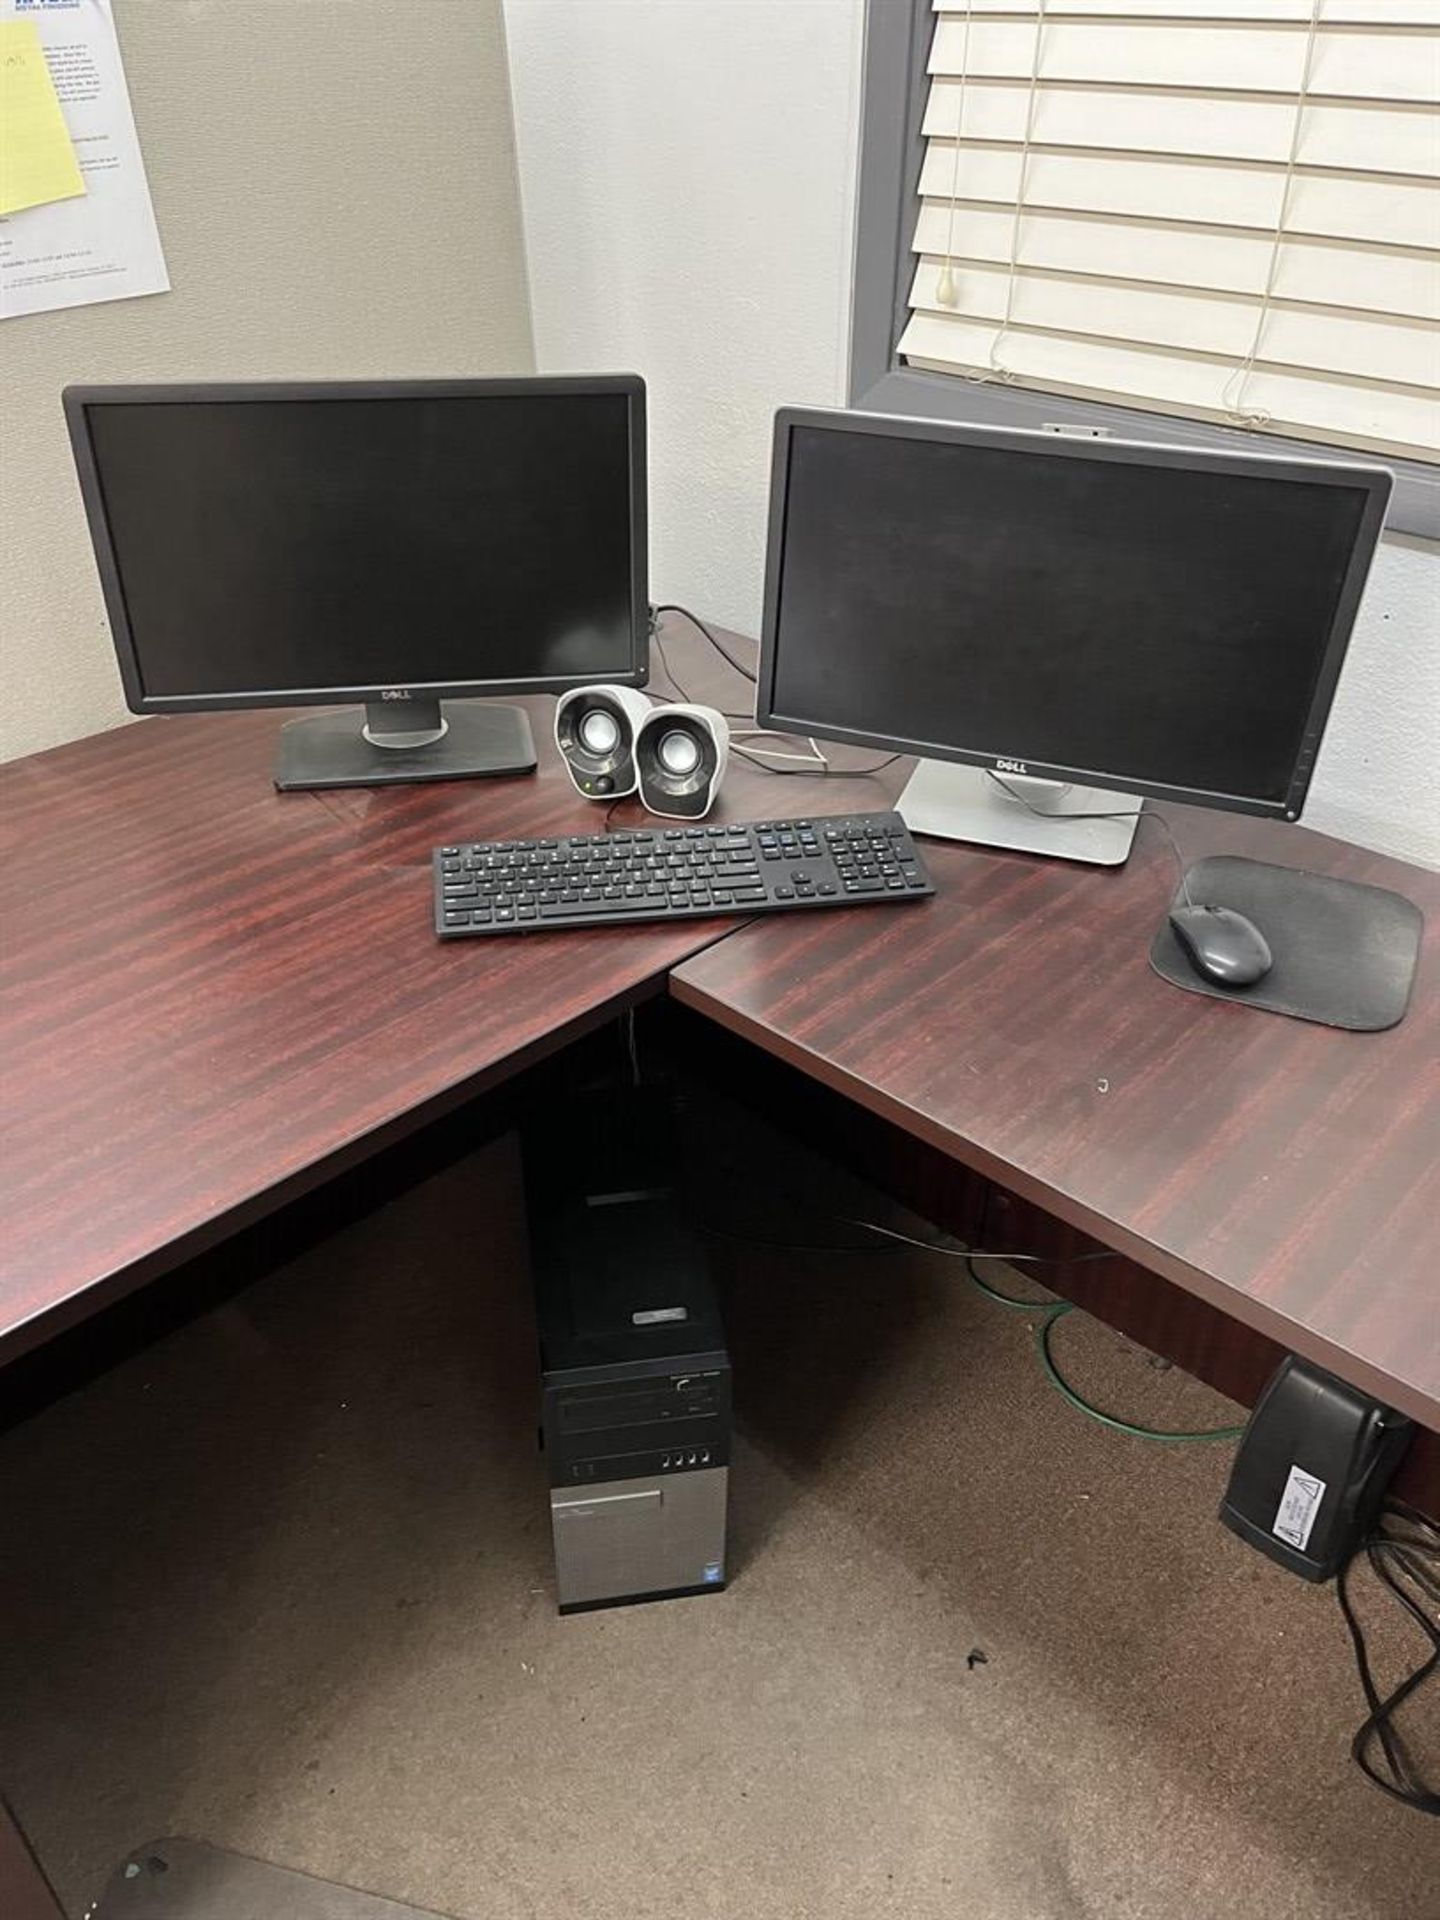 Lot consisting of Corner Desk, Monitor, PC - Image 2 of 2